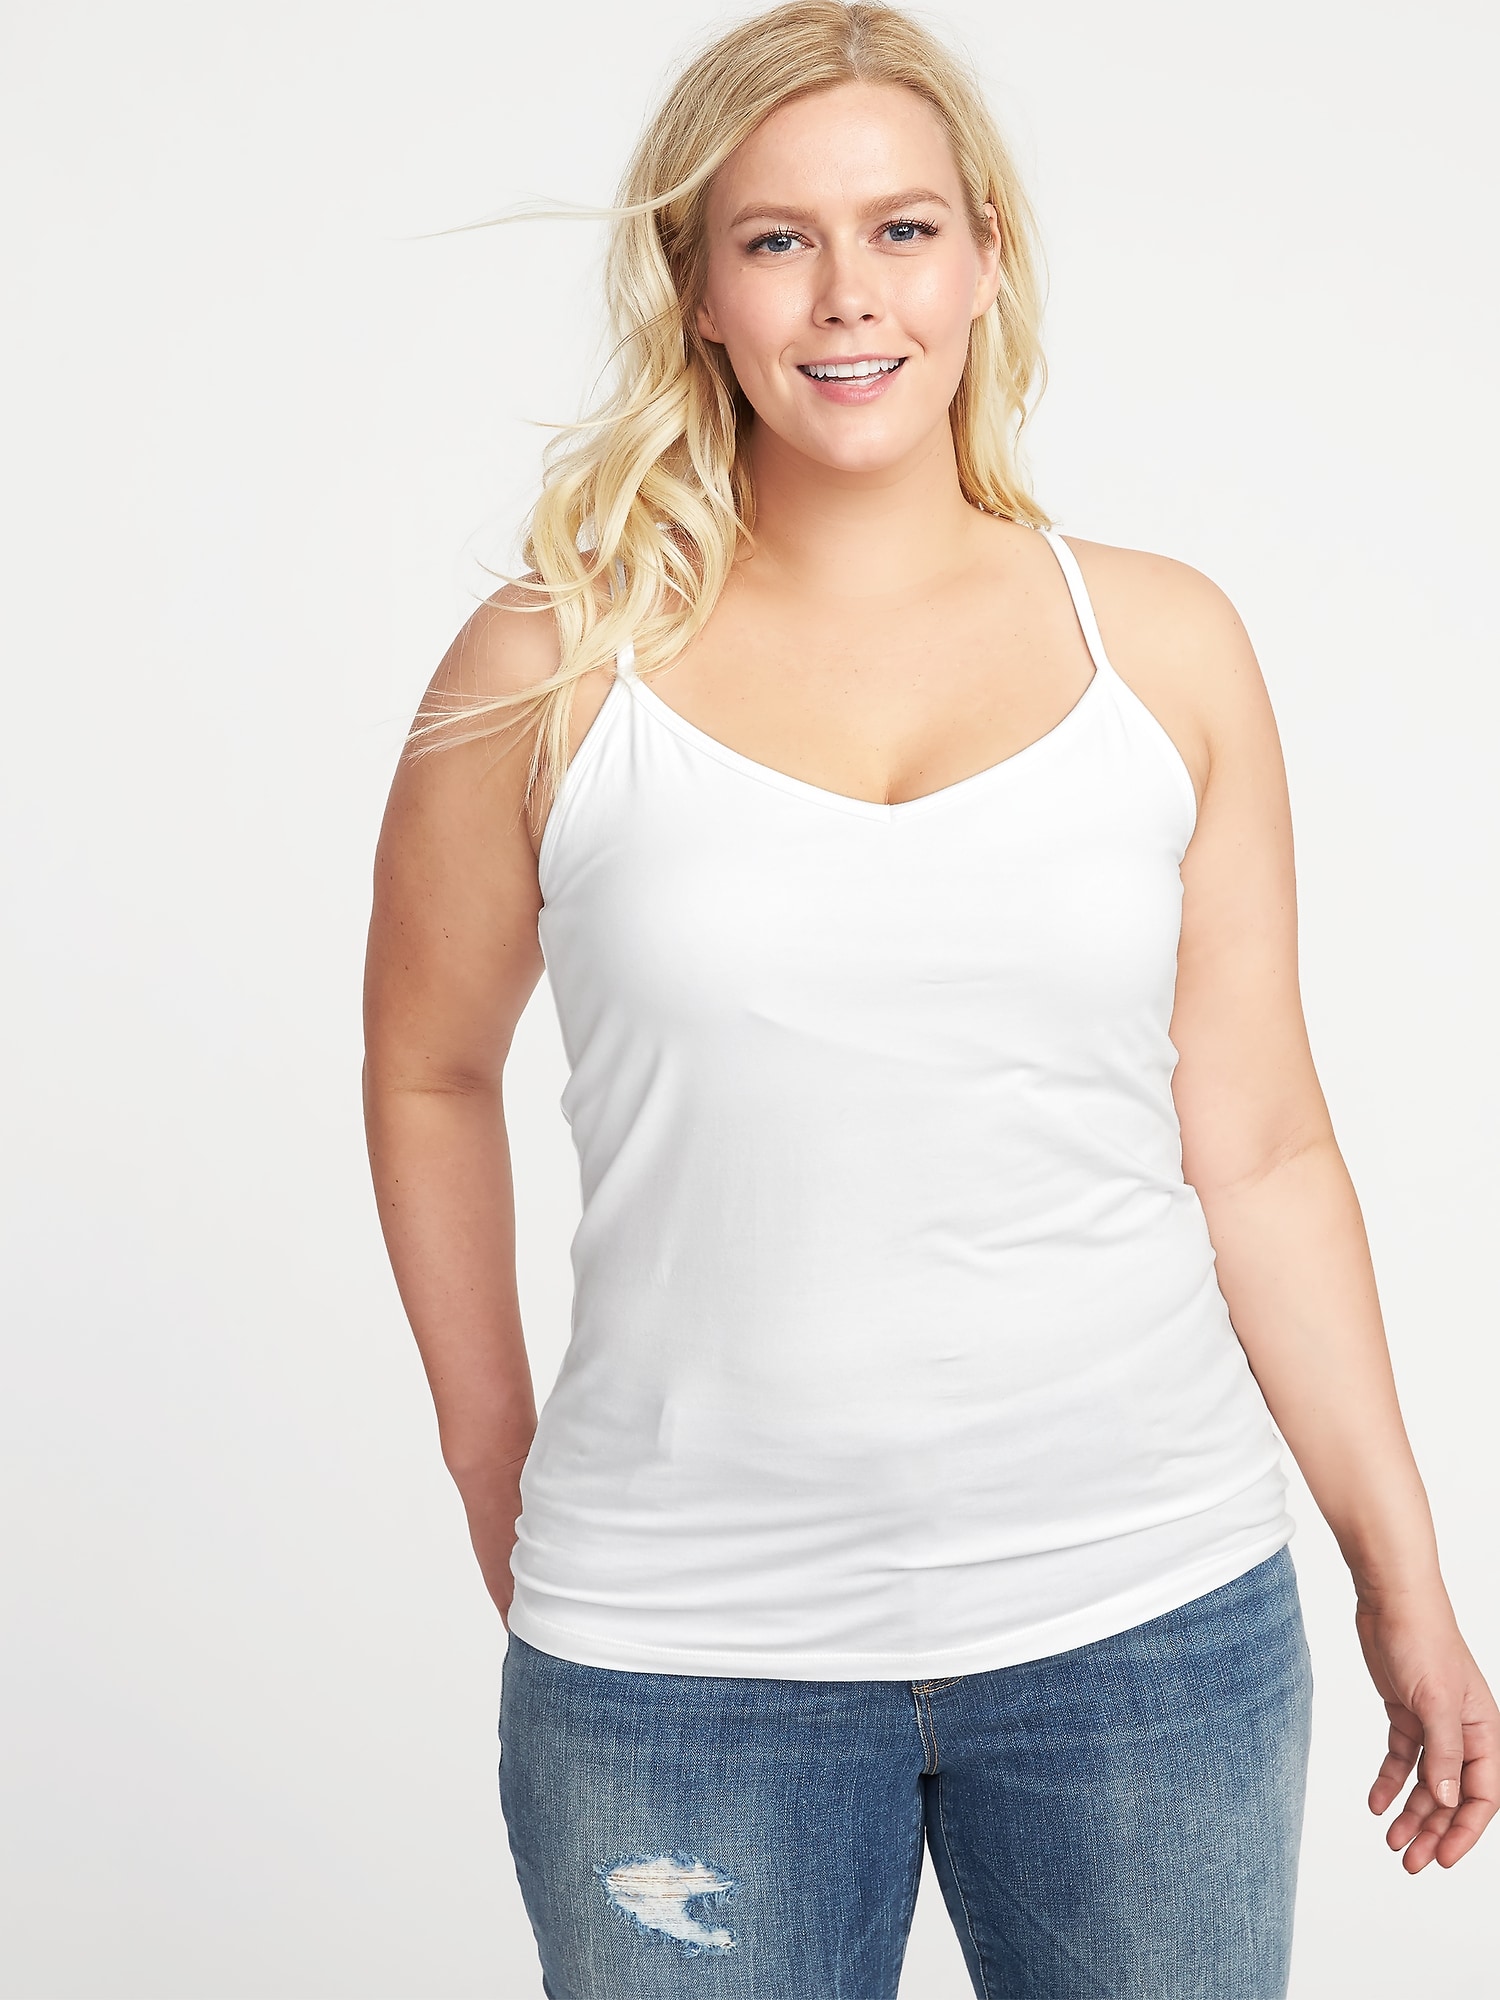 EHTMSAK Camisole for Women Shelf Bra Adjustable Plus Size T Shirt